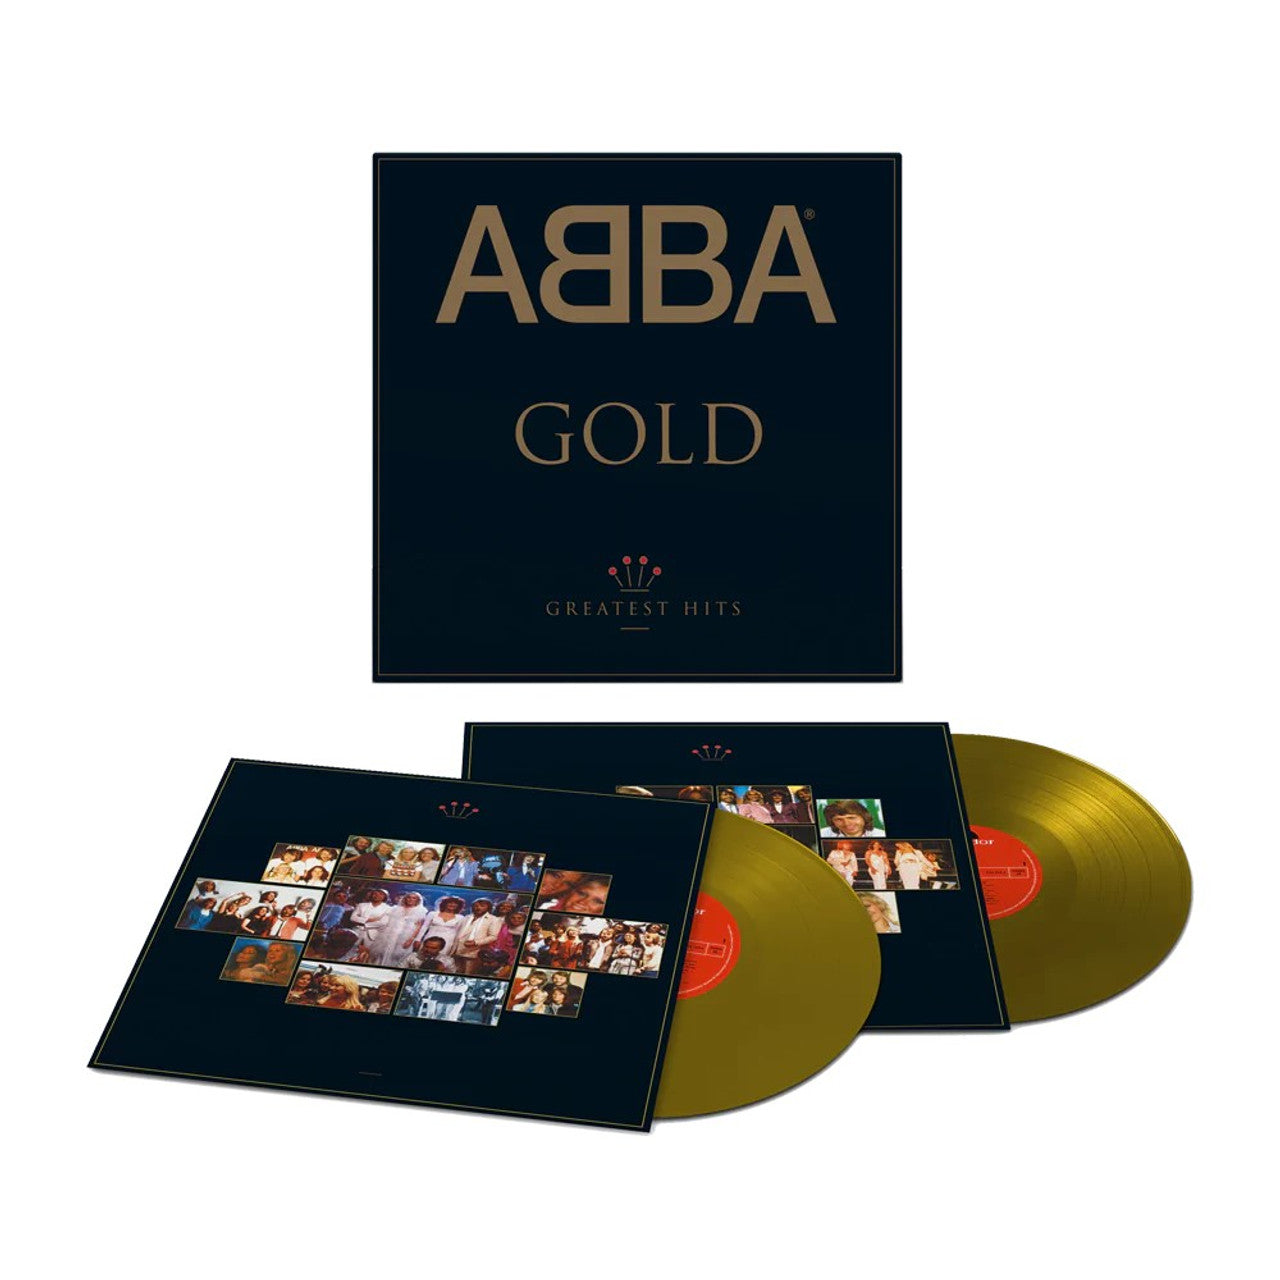 ABBA - Gold: Greatest Hits (Gold 180 Gram Vinyl)